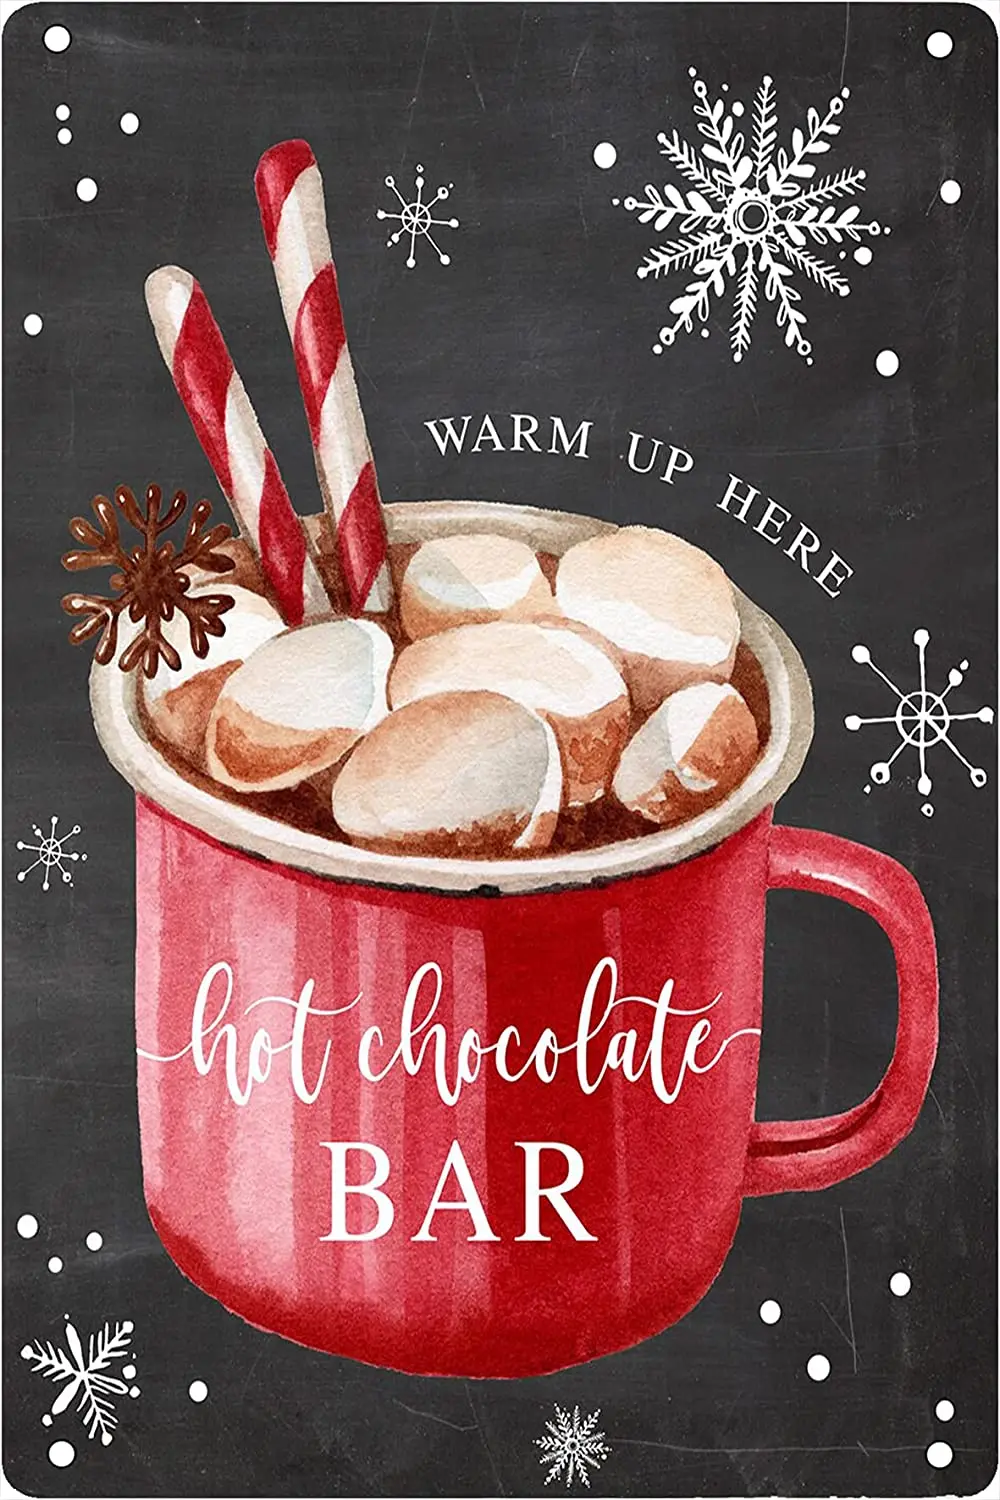 

Warm Up Here Hot Chocolate Bar Metal Tin Sign Kitchen Decorative Cafe Bar Home Metal Plate Wall Decor Restaurant Wall